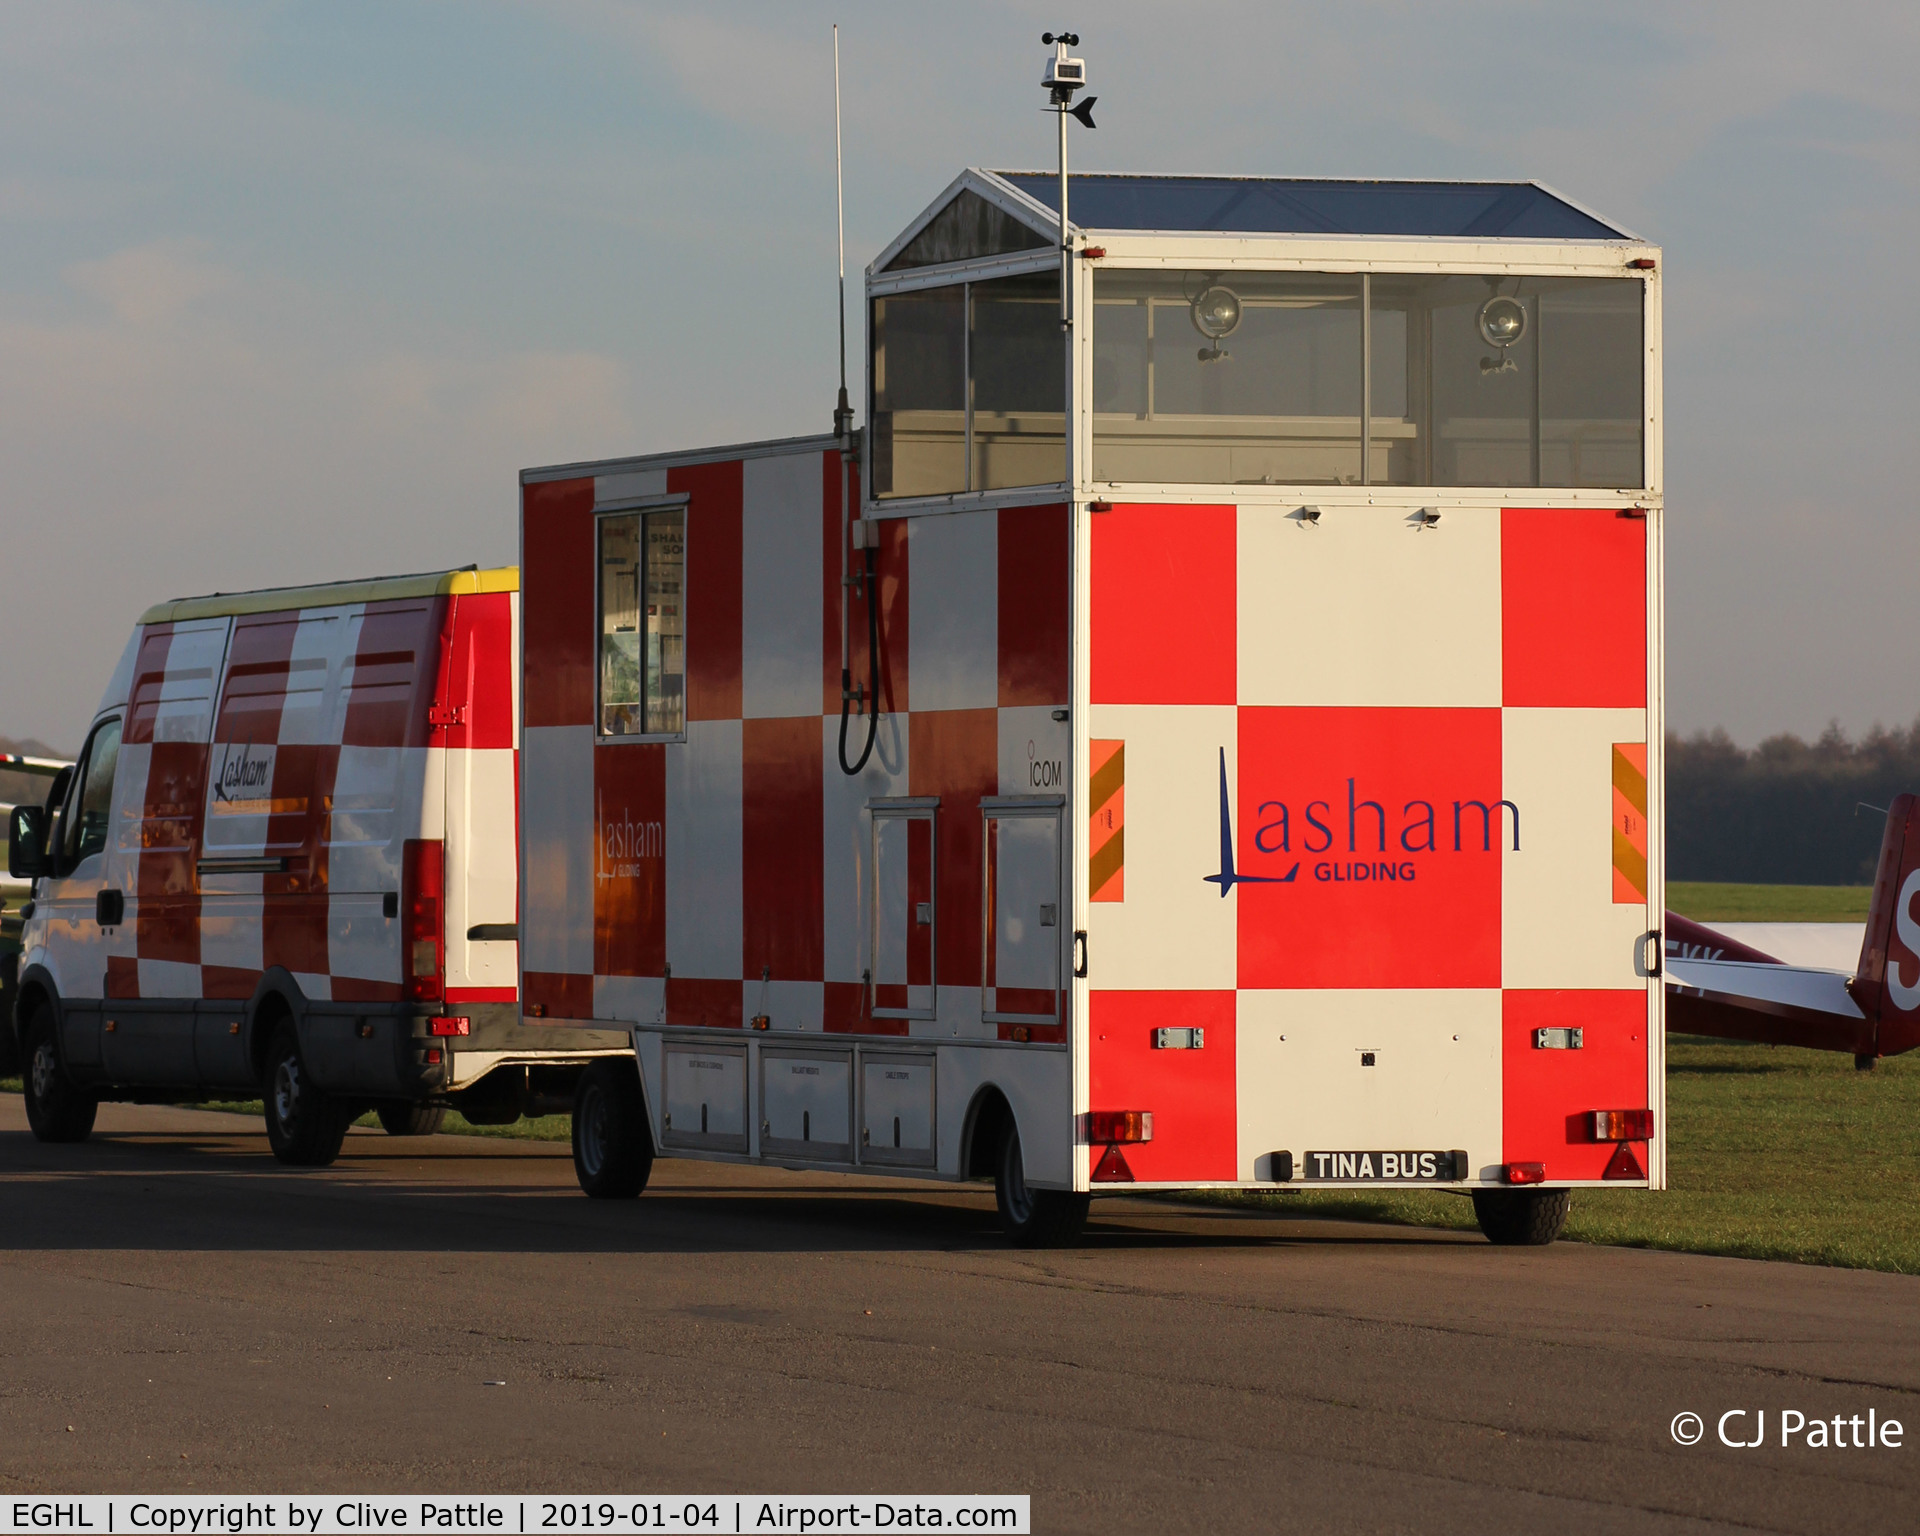 Lasham Airfield Airport, Basingstoke, England United Kingdom (EGHL) - Lasham Gliding Club - Gliding Operations Control Caravan